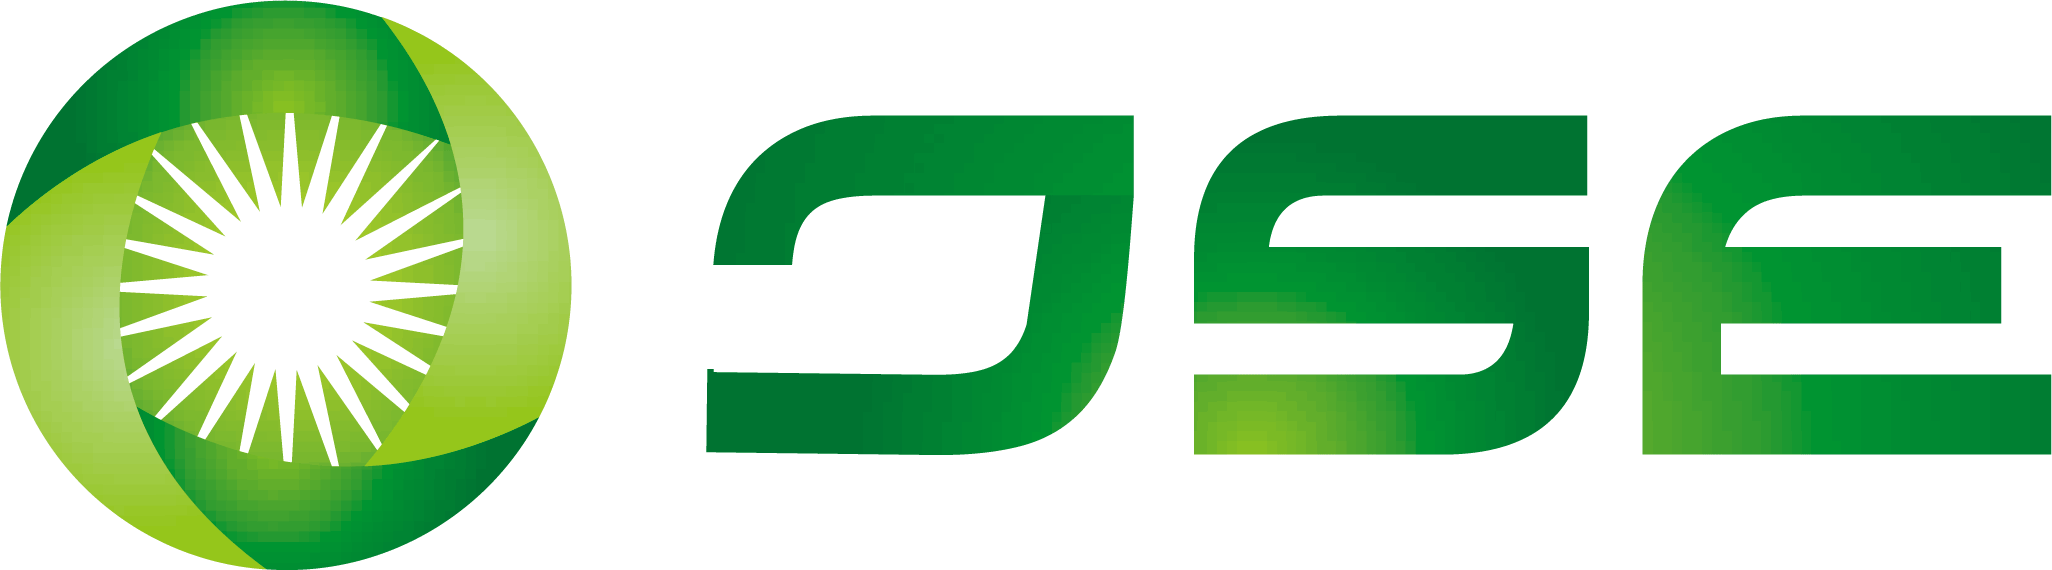 Logo_2000px.png